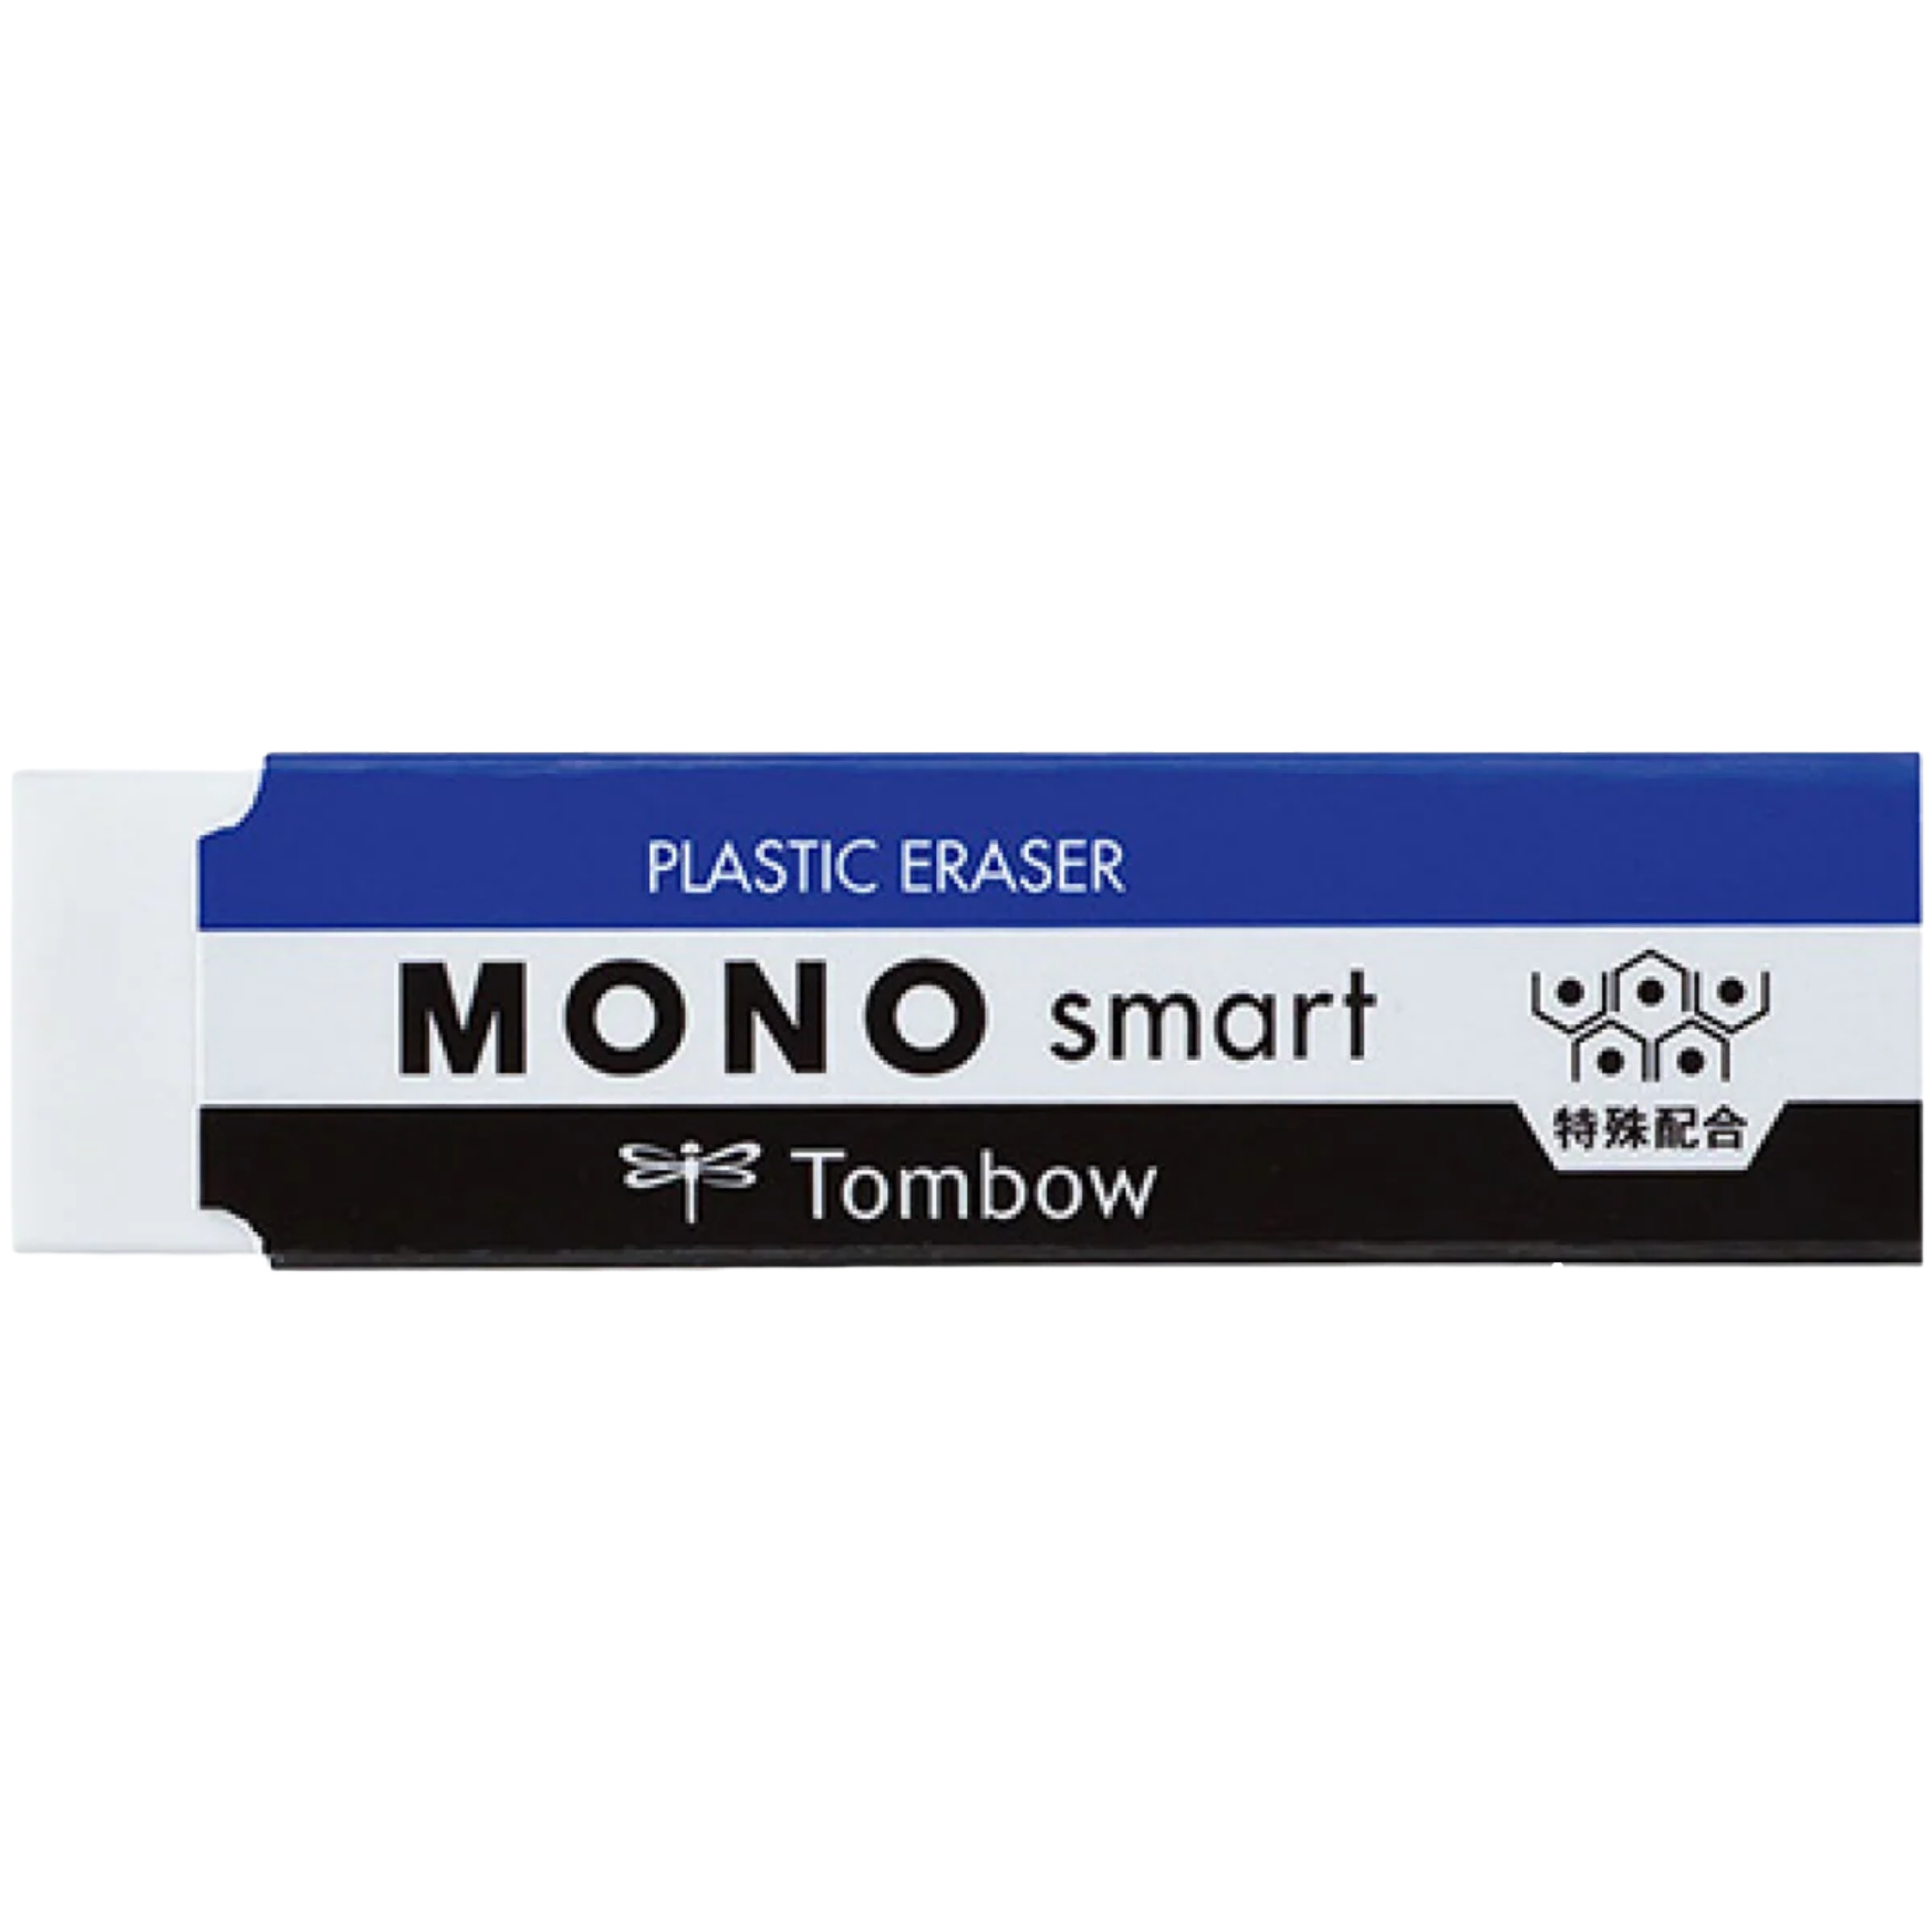 Borracha branca Mono Smart da Tombow.